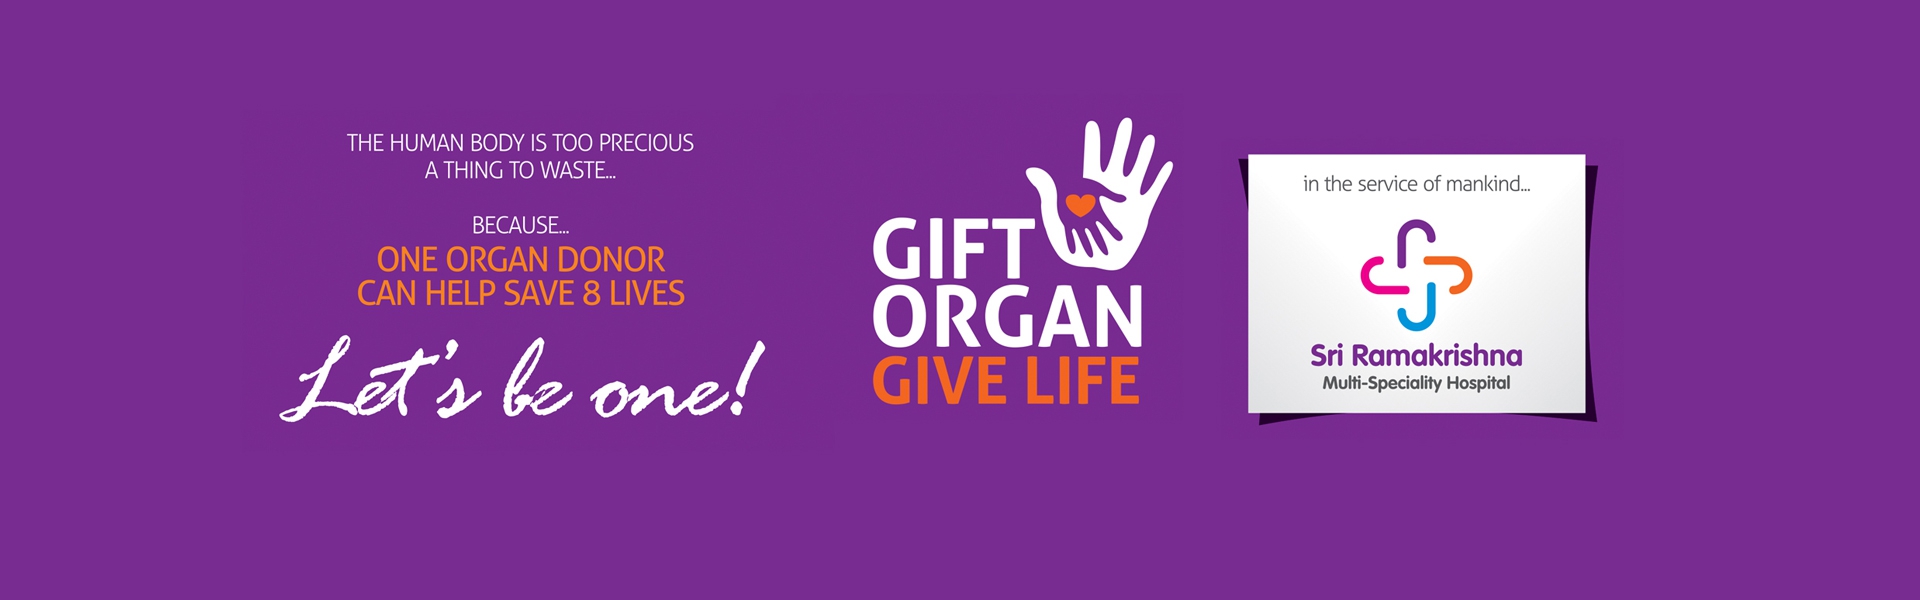 Gift Organ... Give Life - an initiative of Sri Ramakrishna Hospital